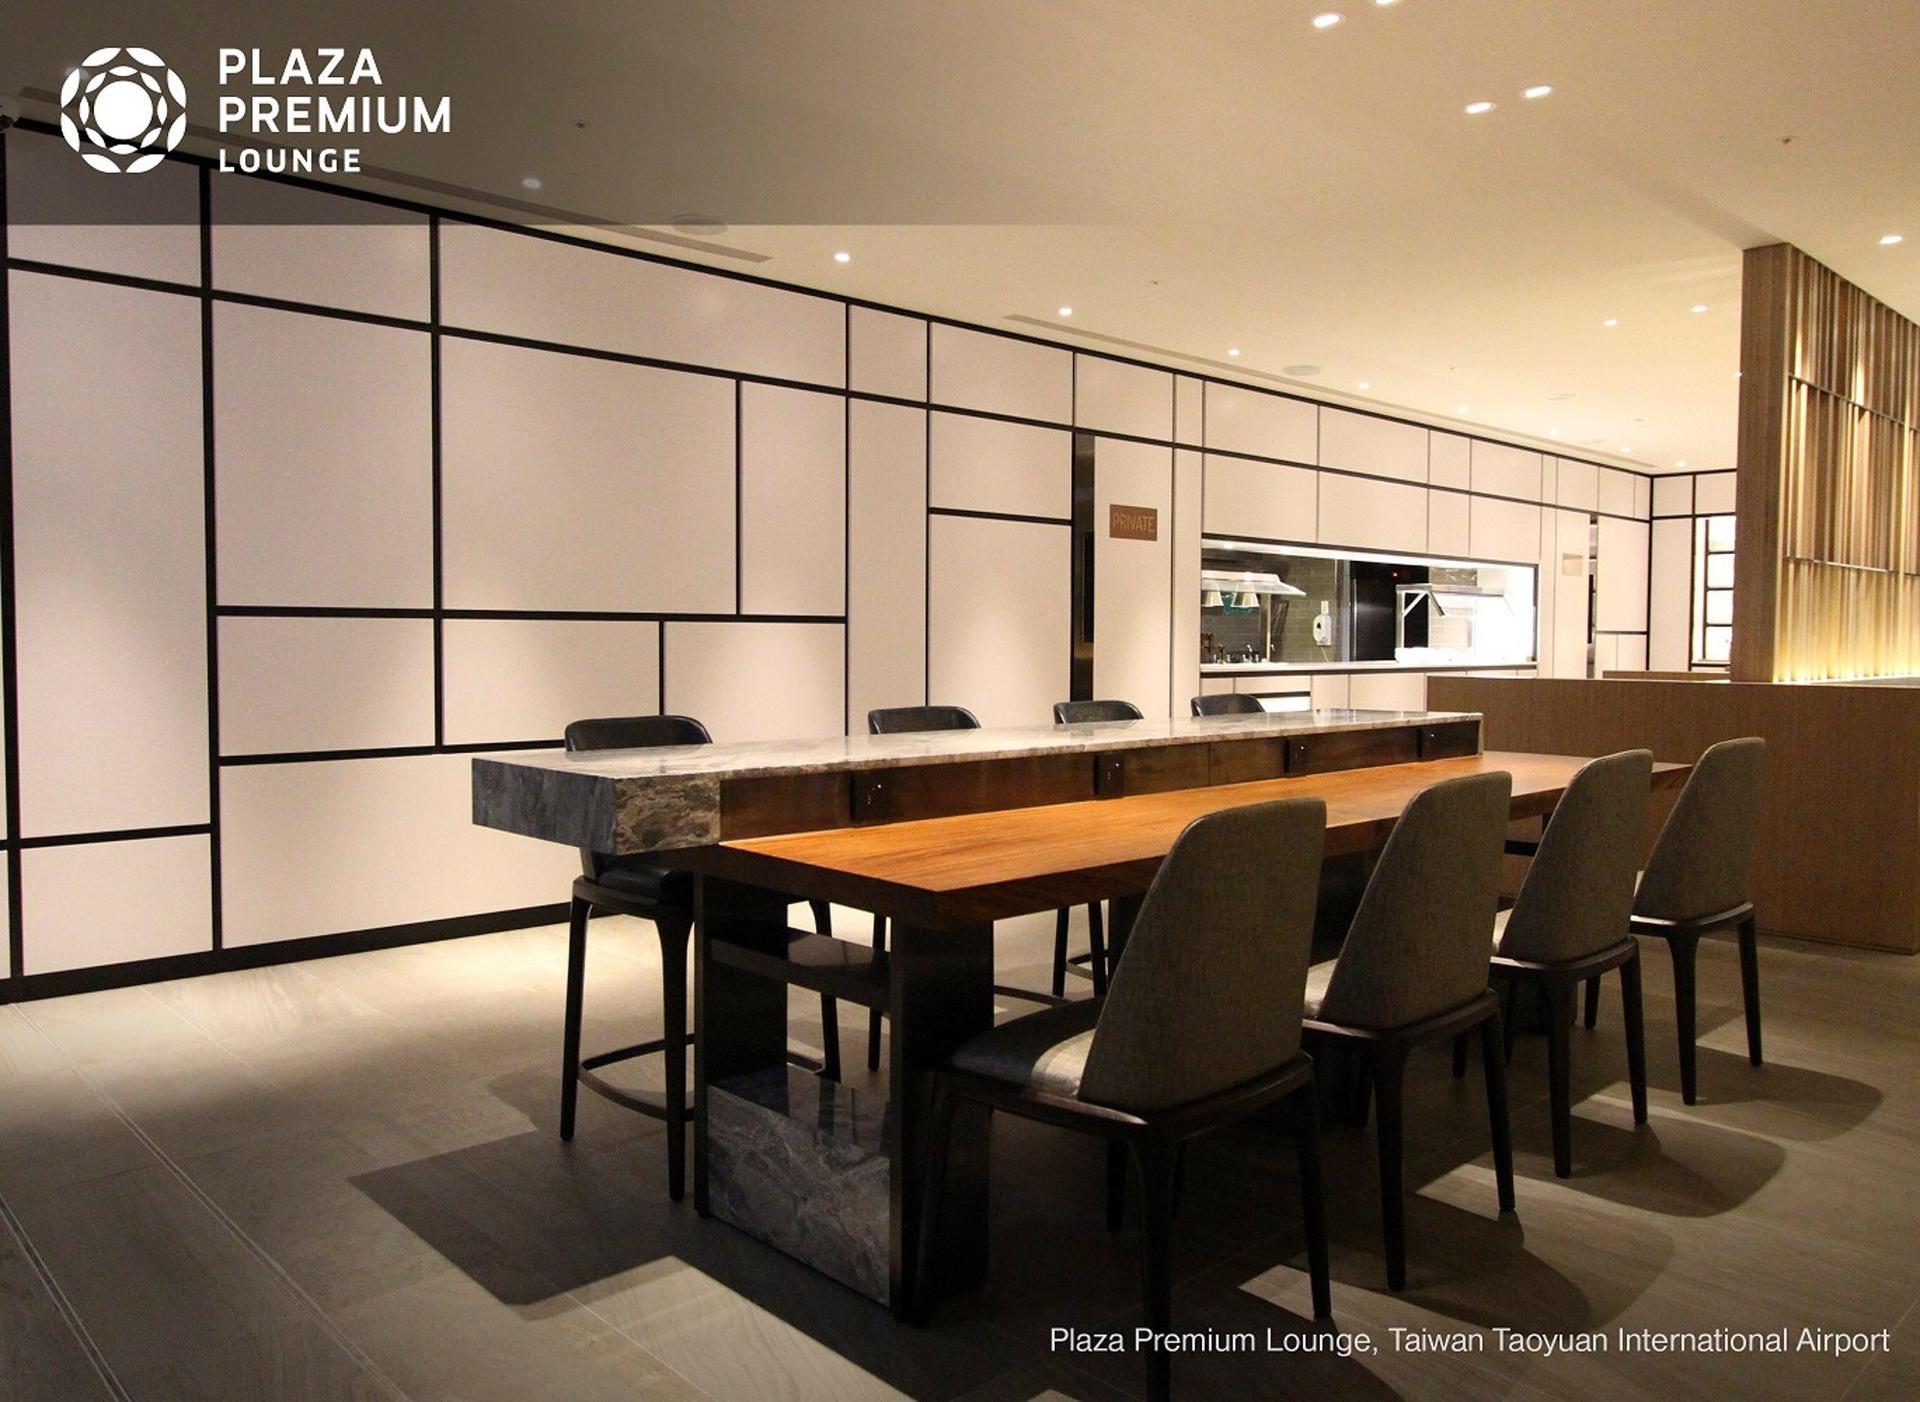 Plaza Premium Lounge (Zone A) image 29 of 99